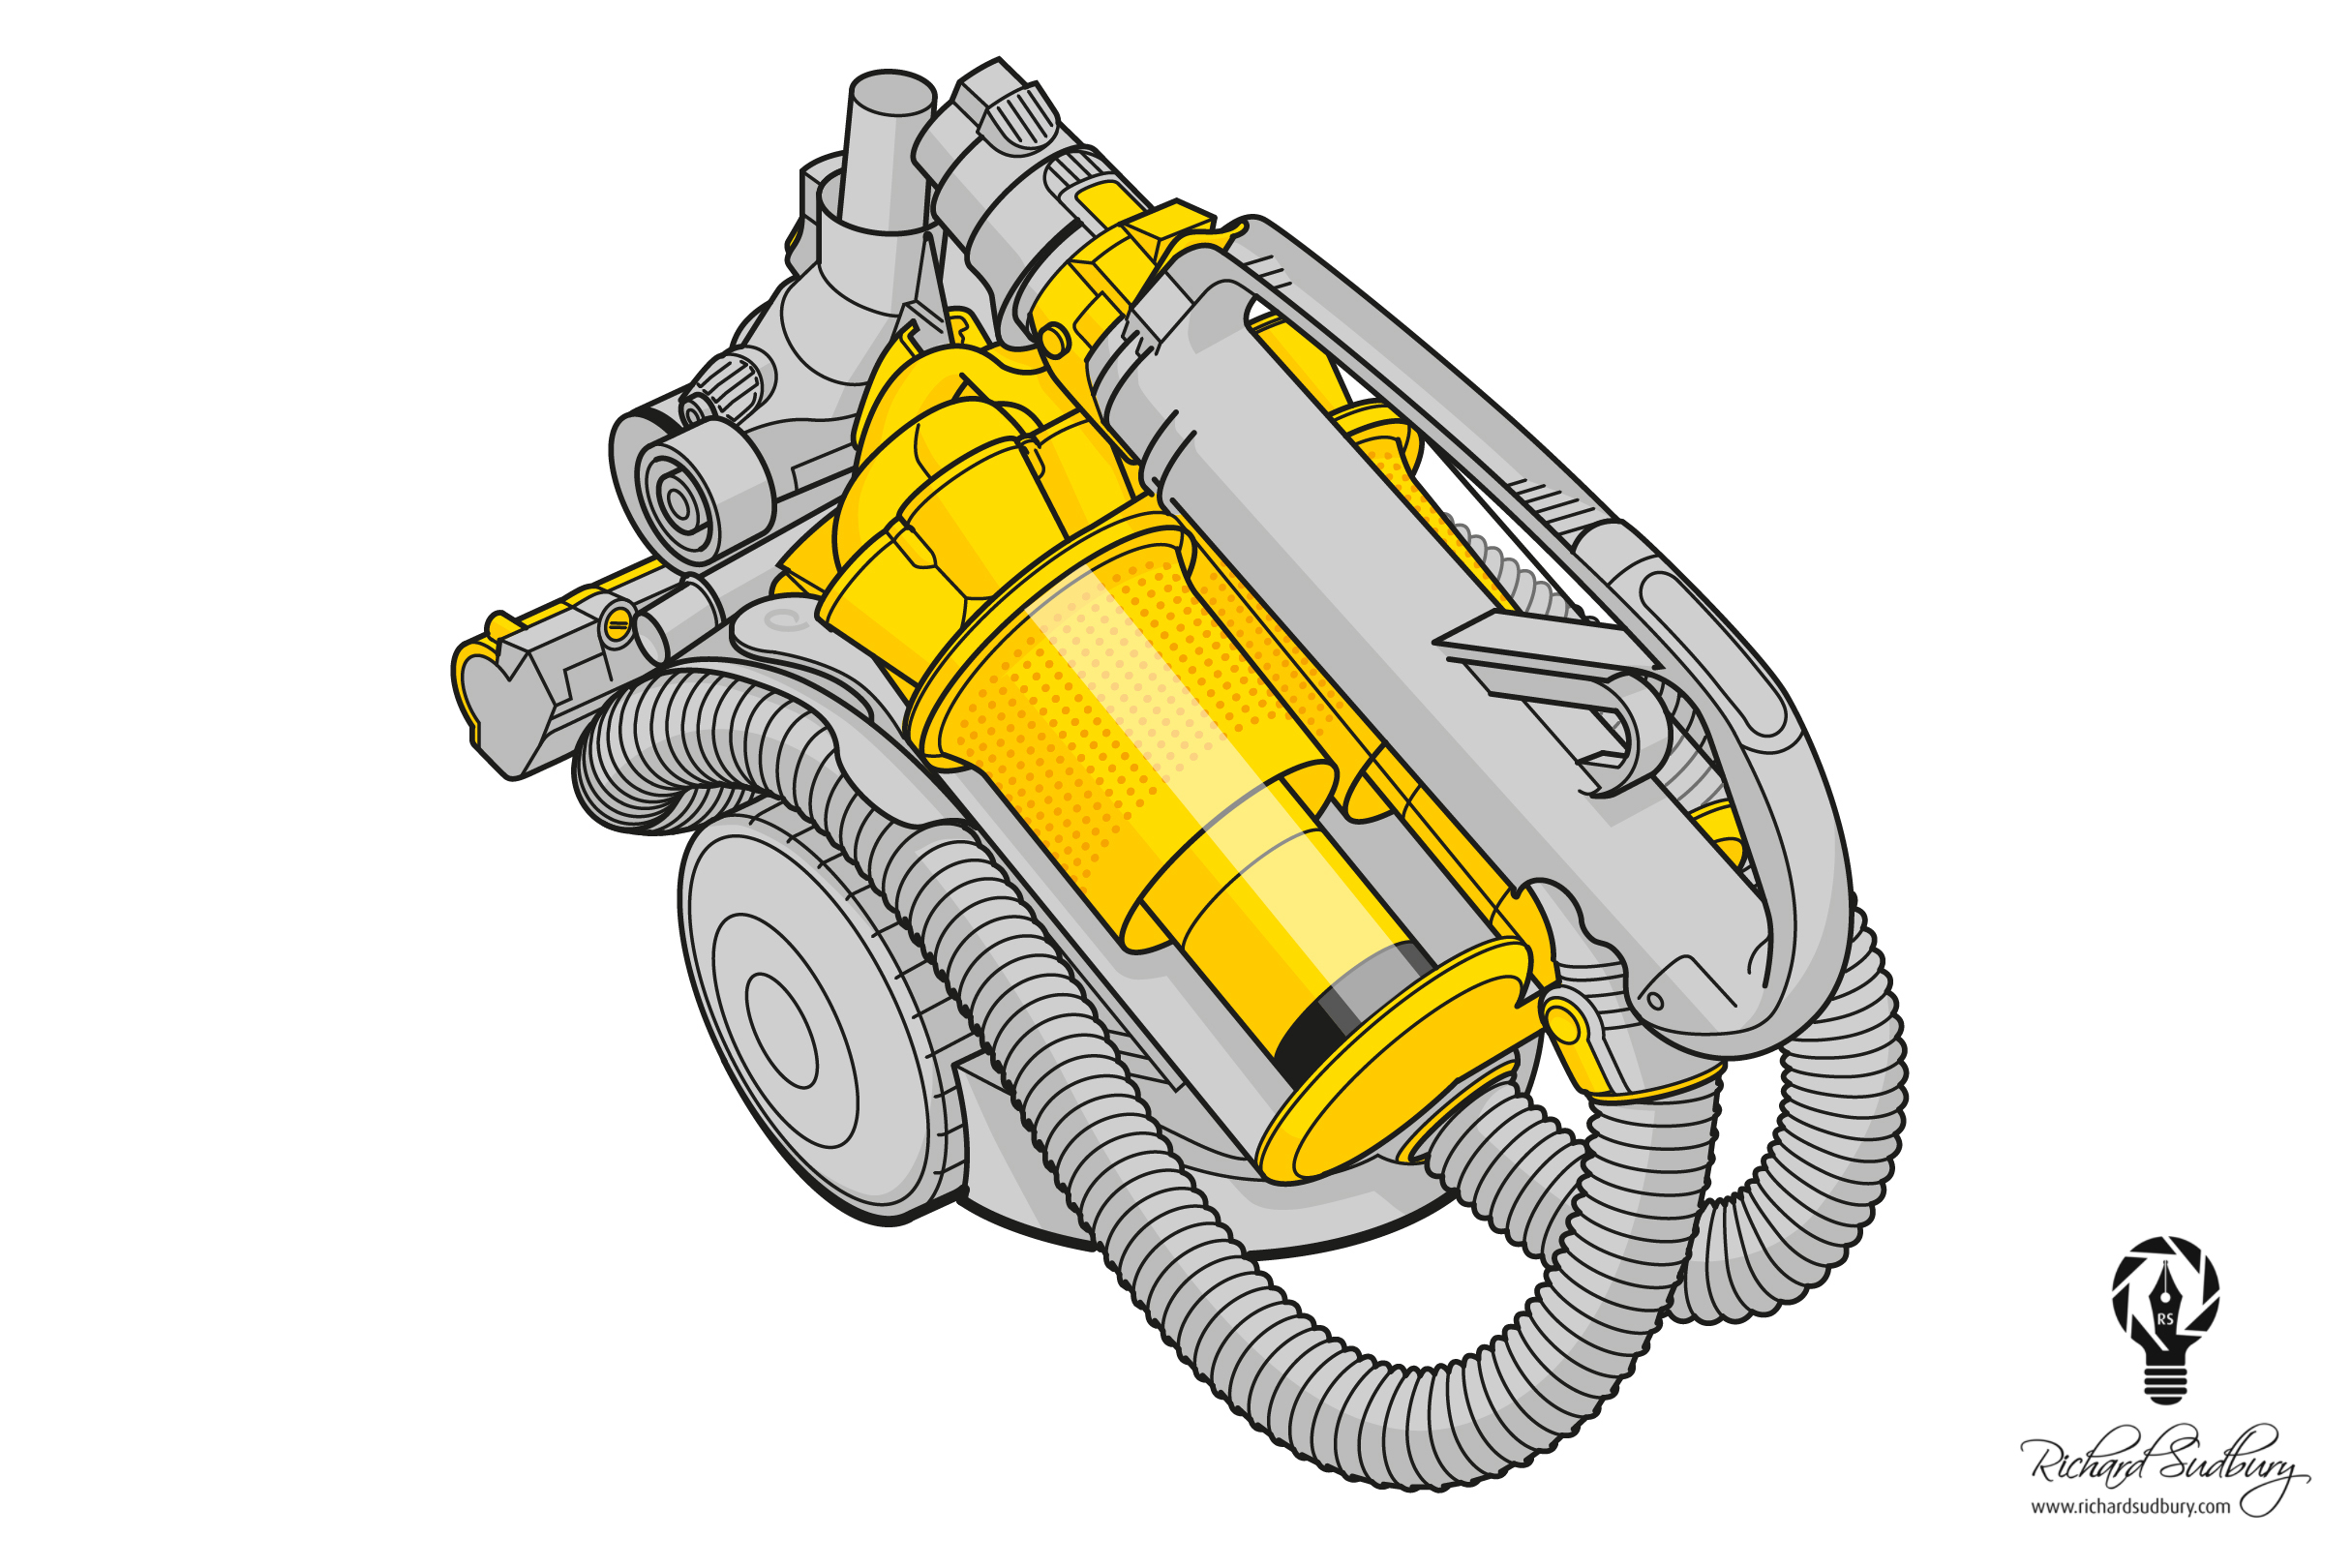 Dyson Technical Illustration